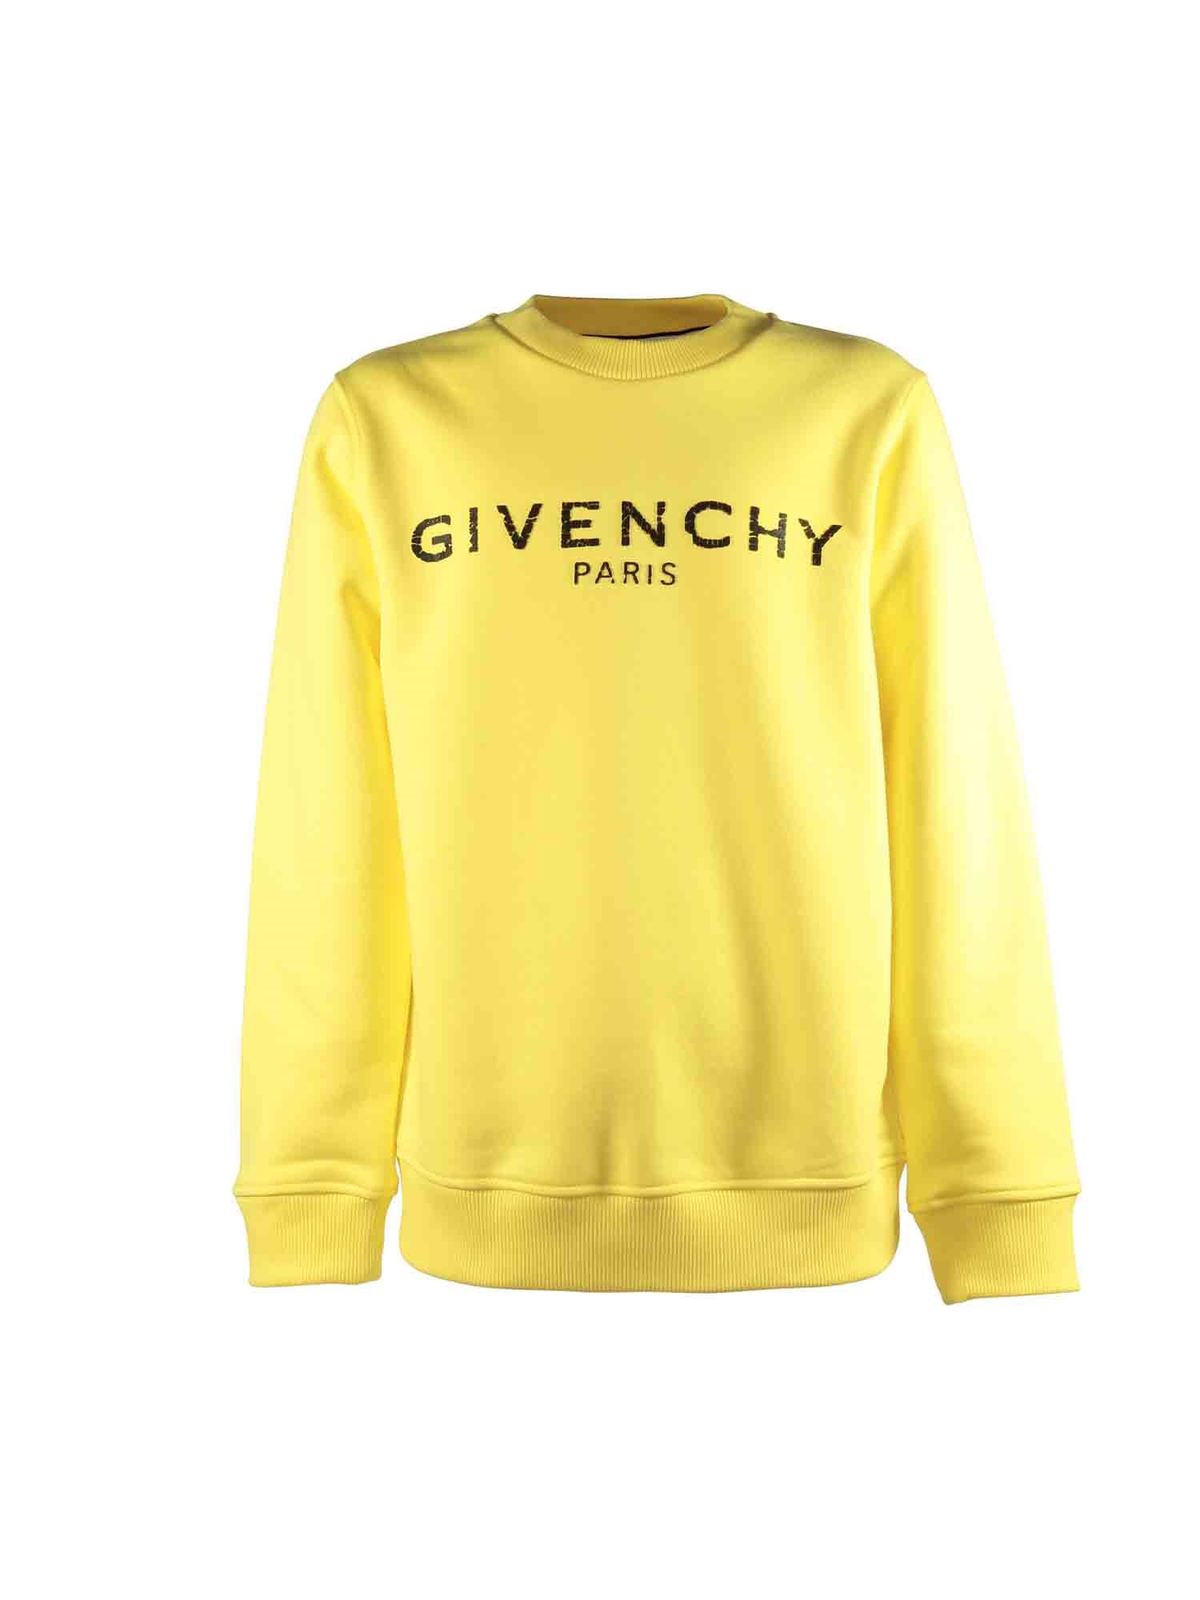 Givenchy - Yellow sweatshirt with 